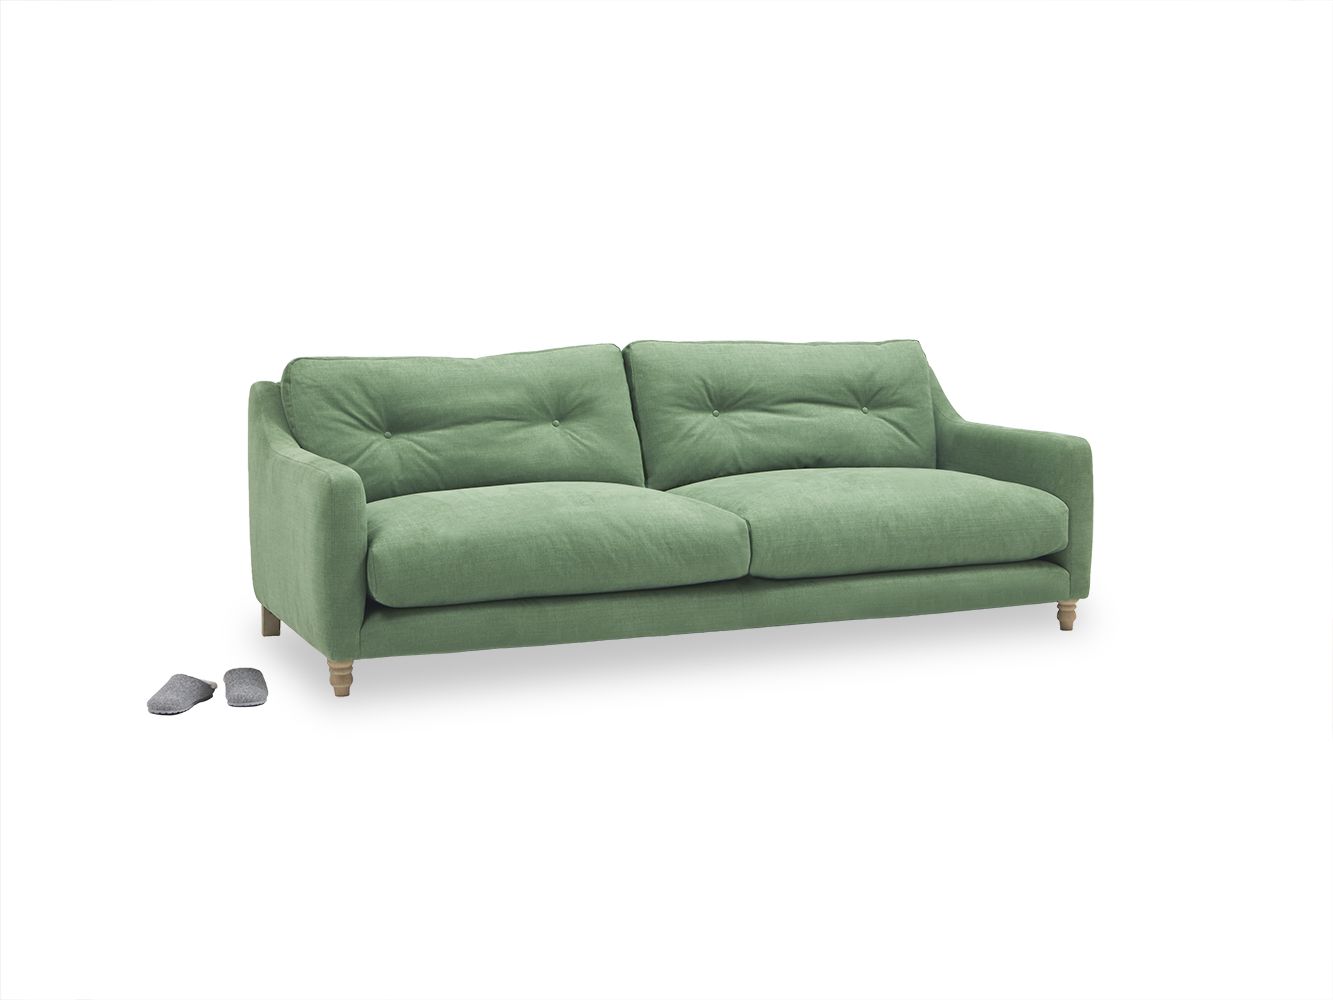 Slim Jim Sofa | Narrow Sofa | Loaf For Loft Arm Sofa Chairs (View 14 of 20)